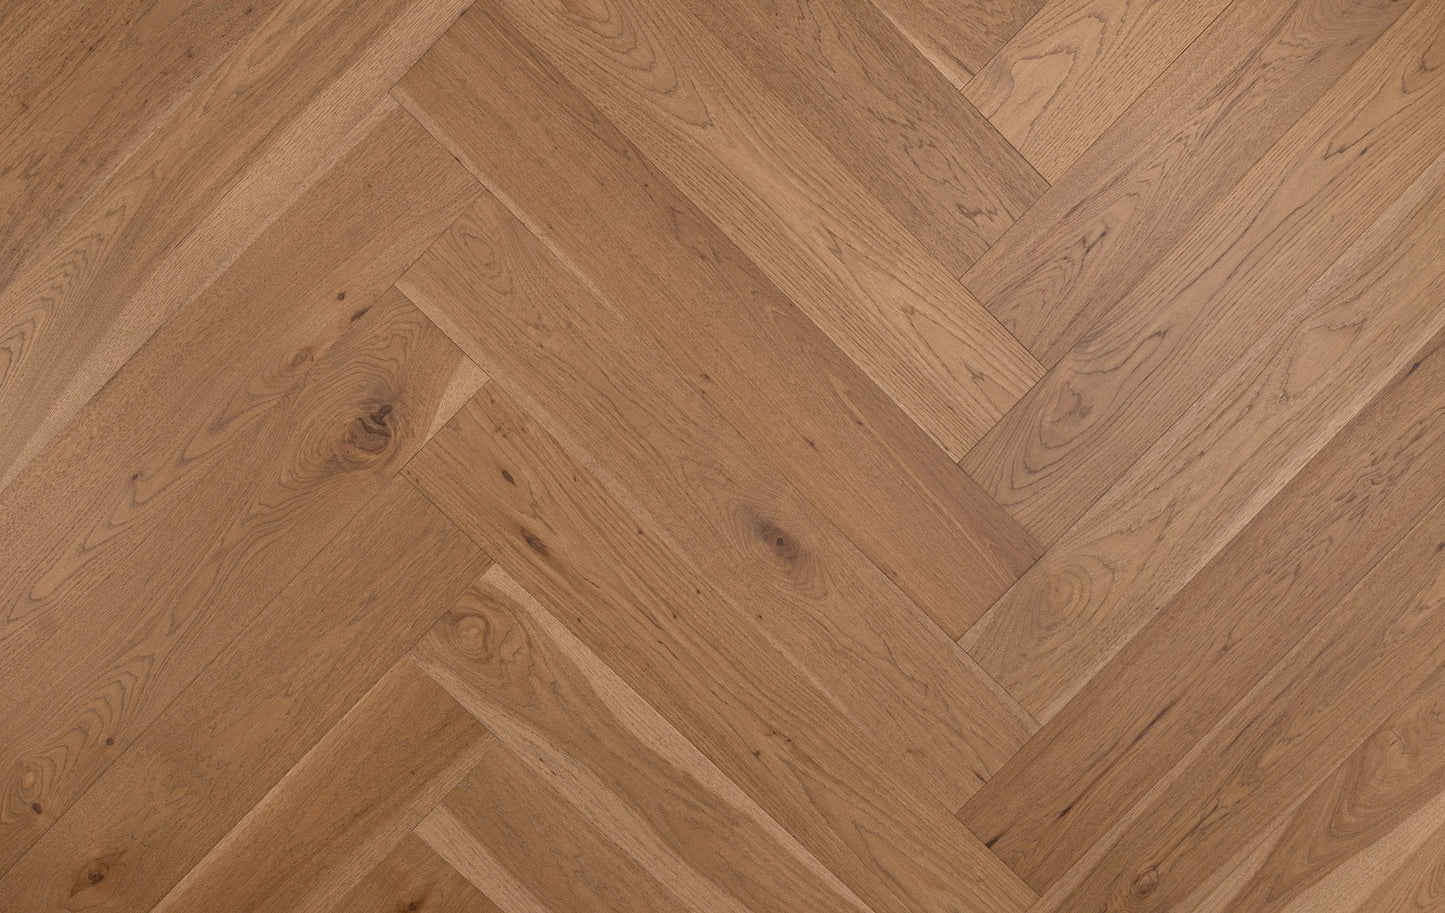 Hickory wood flooring - medium brown tones, traceable, eco-responsible, certified - Aragon